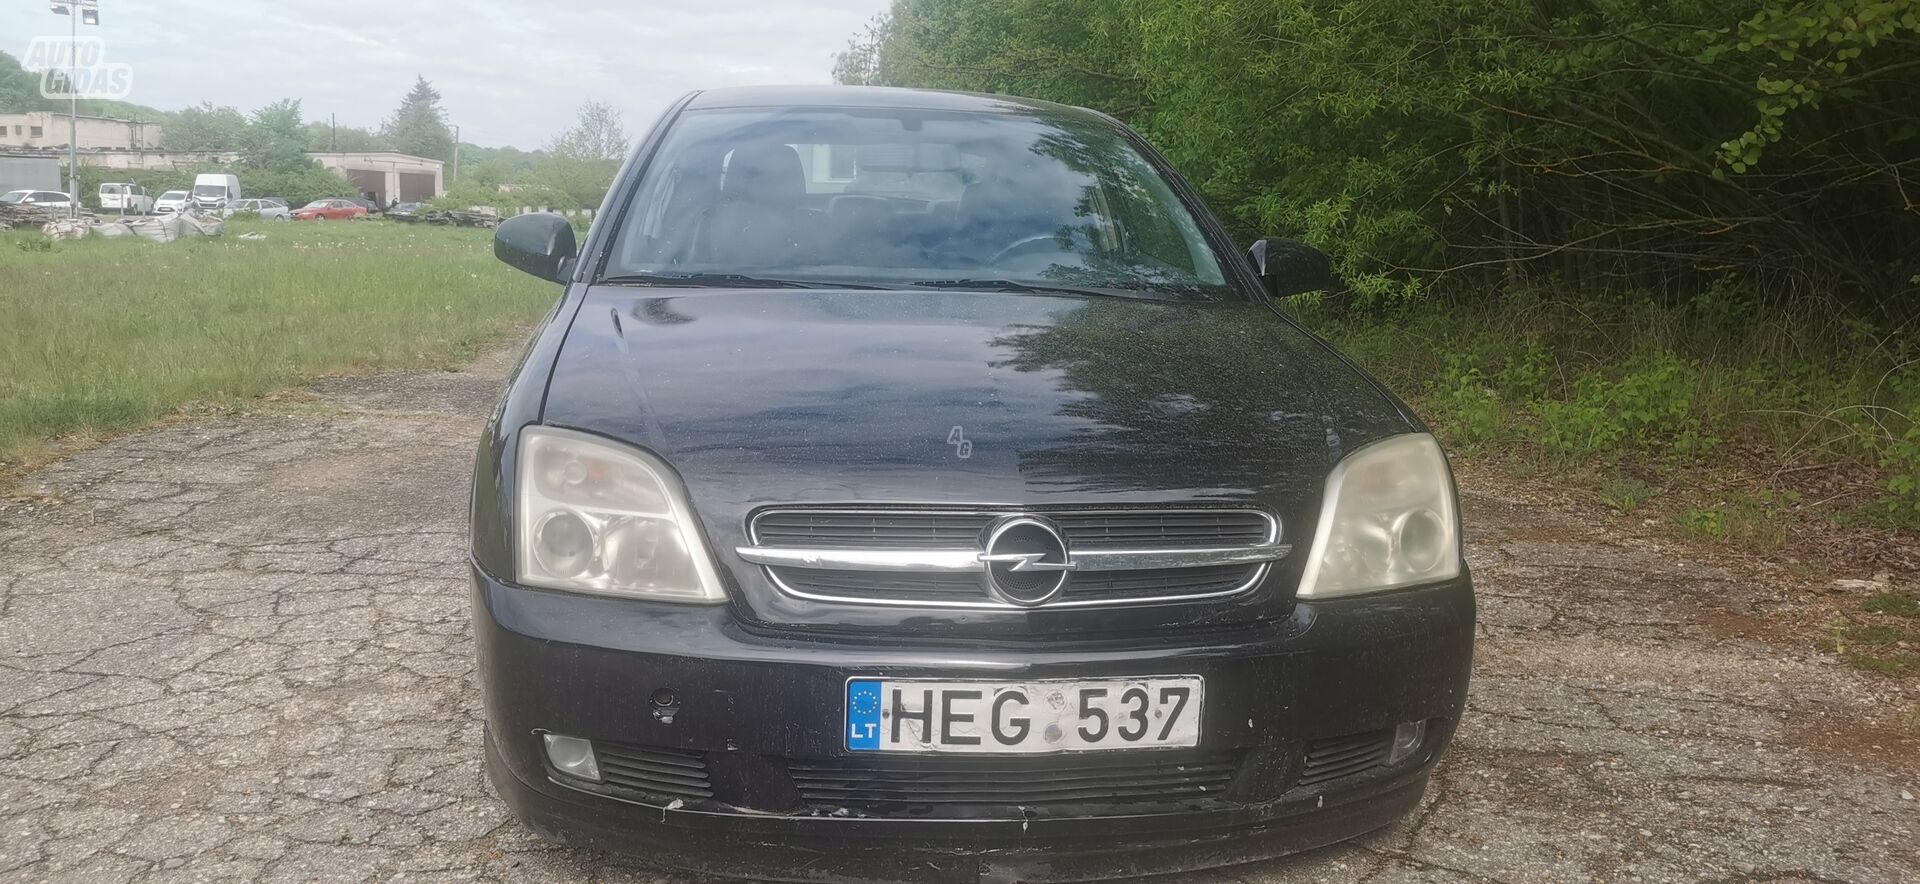 Opel Vectra 2003 m dalys